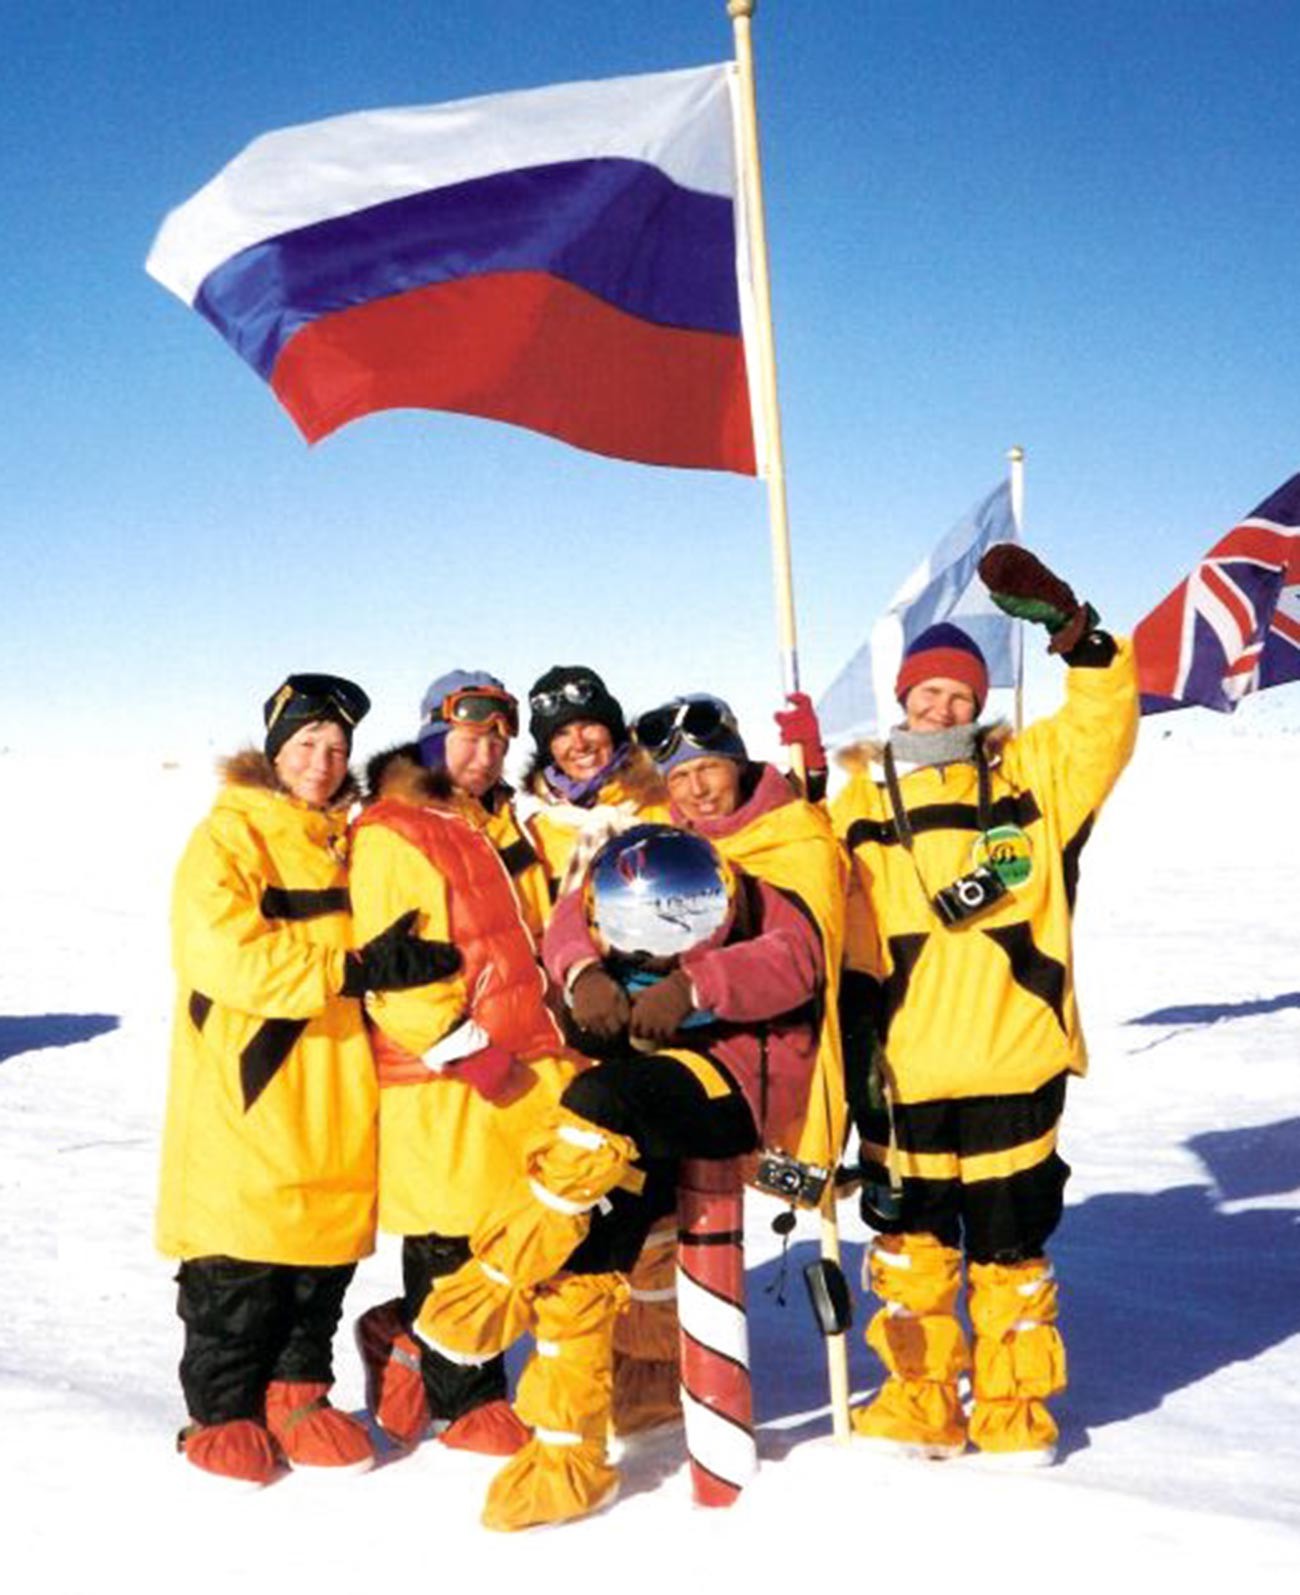 Metelitsa members at the South Pole.